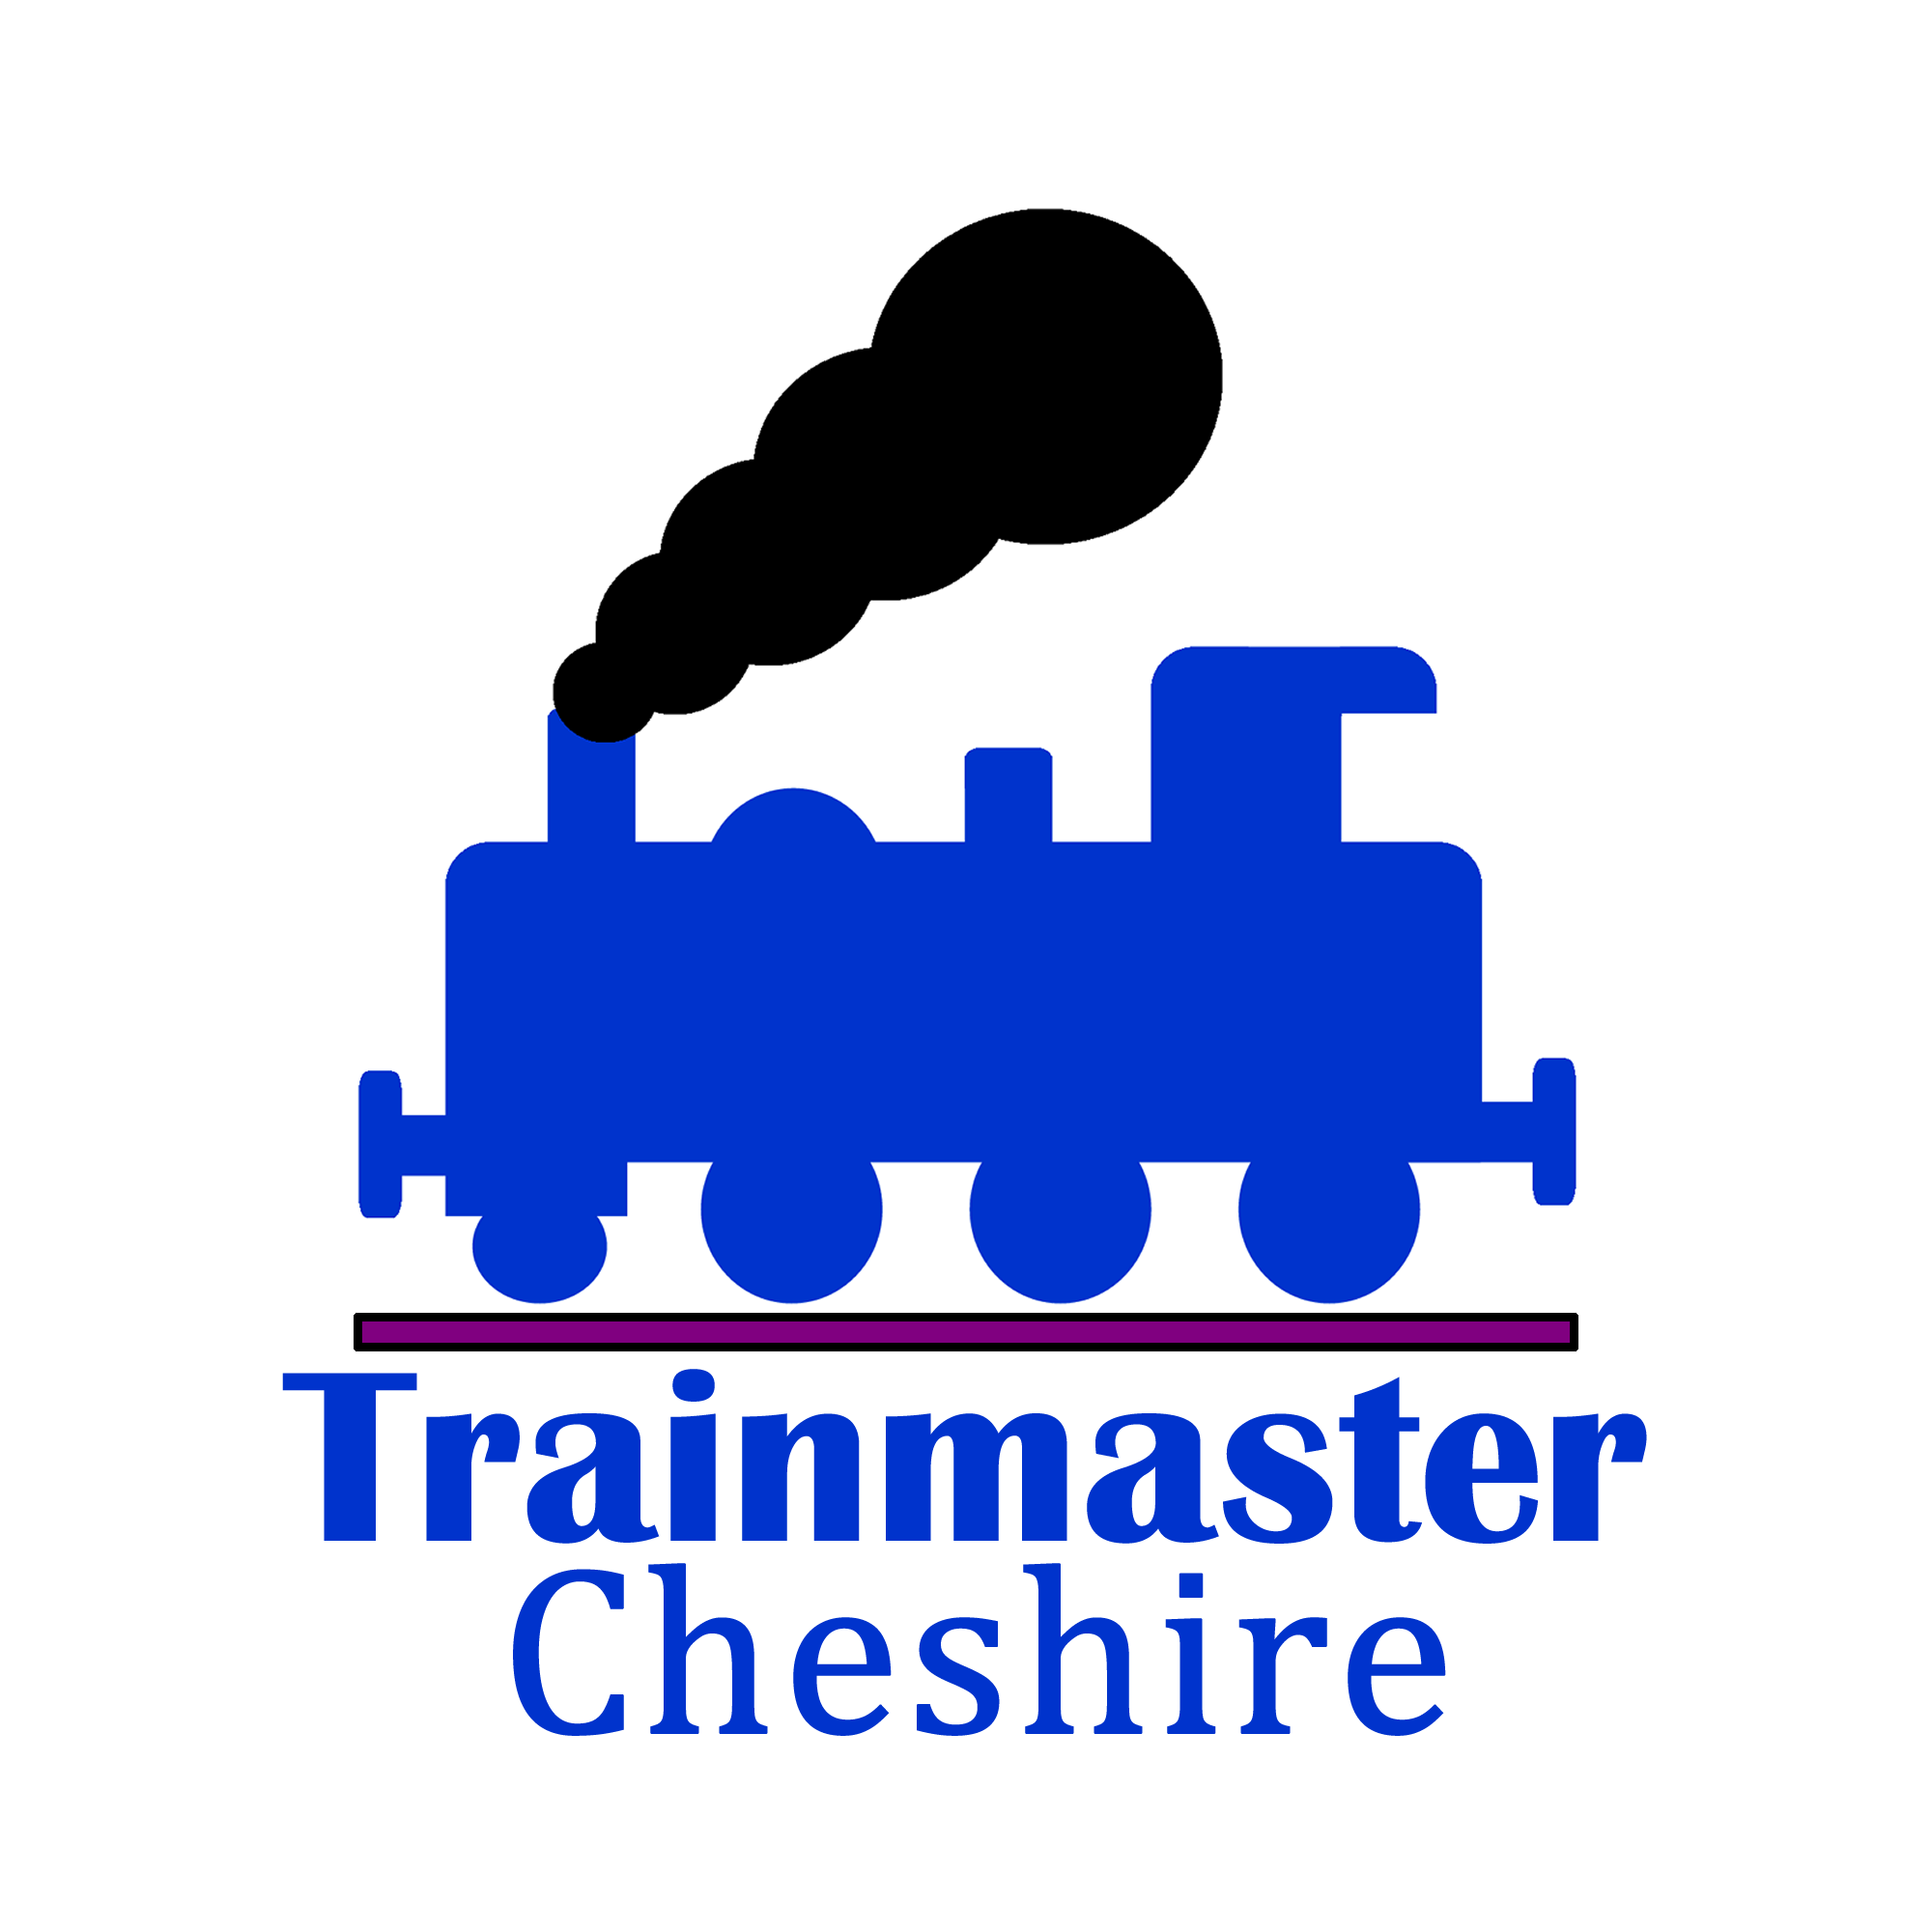 Warrington | Saturday 27th January – Trainmaster Cheshire